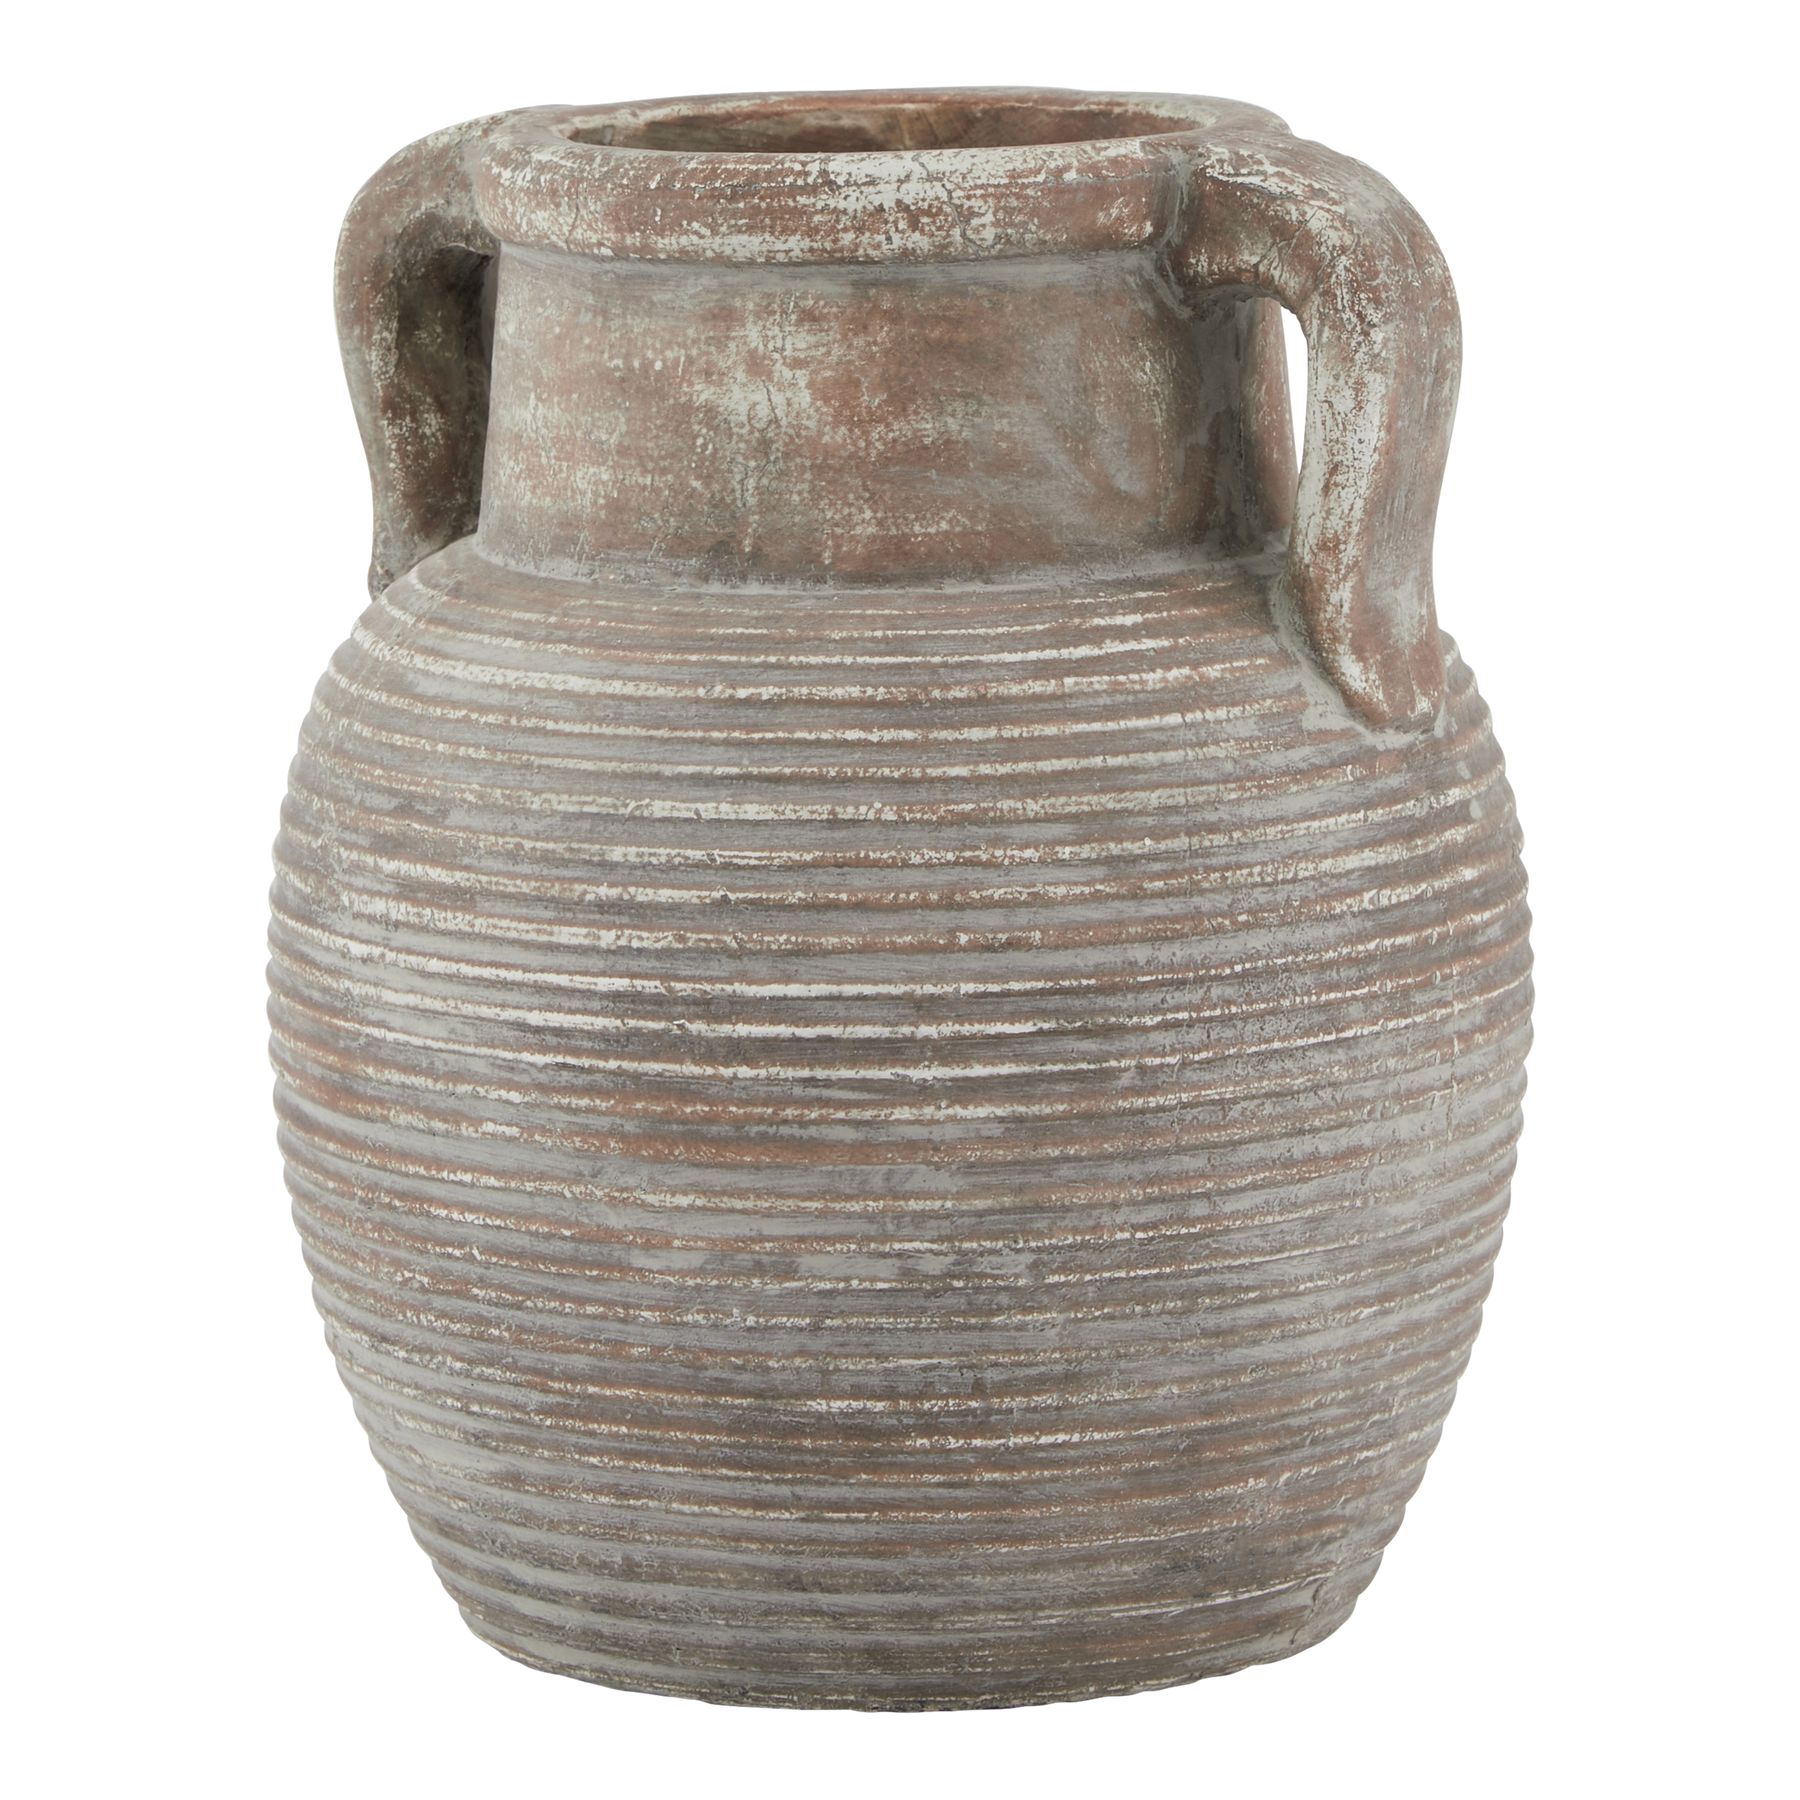 Siena Brown Amphora Pot - Image 1